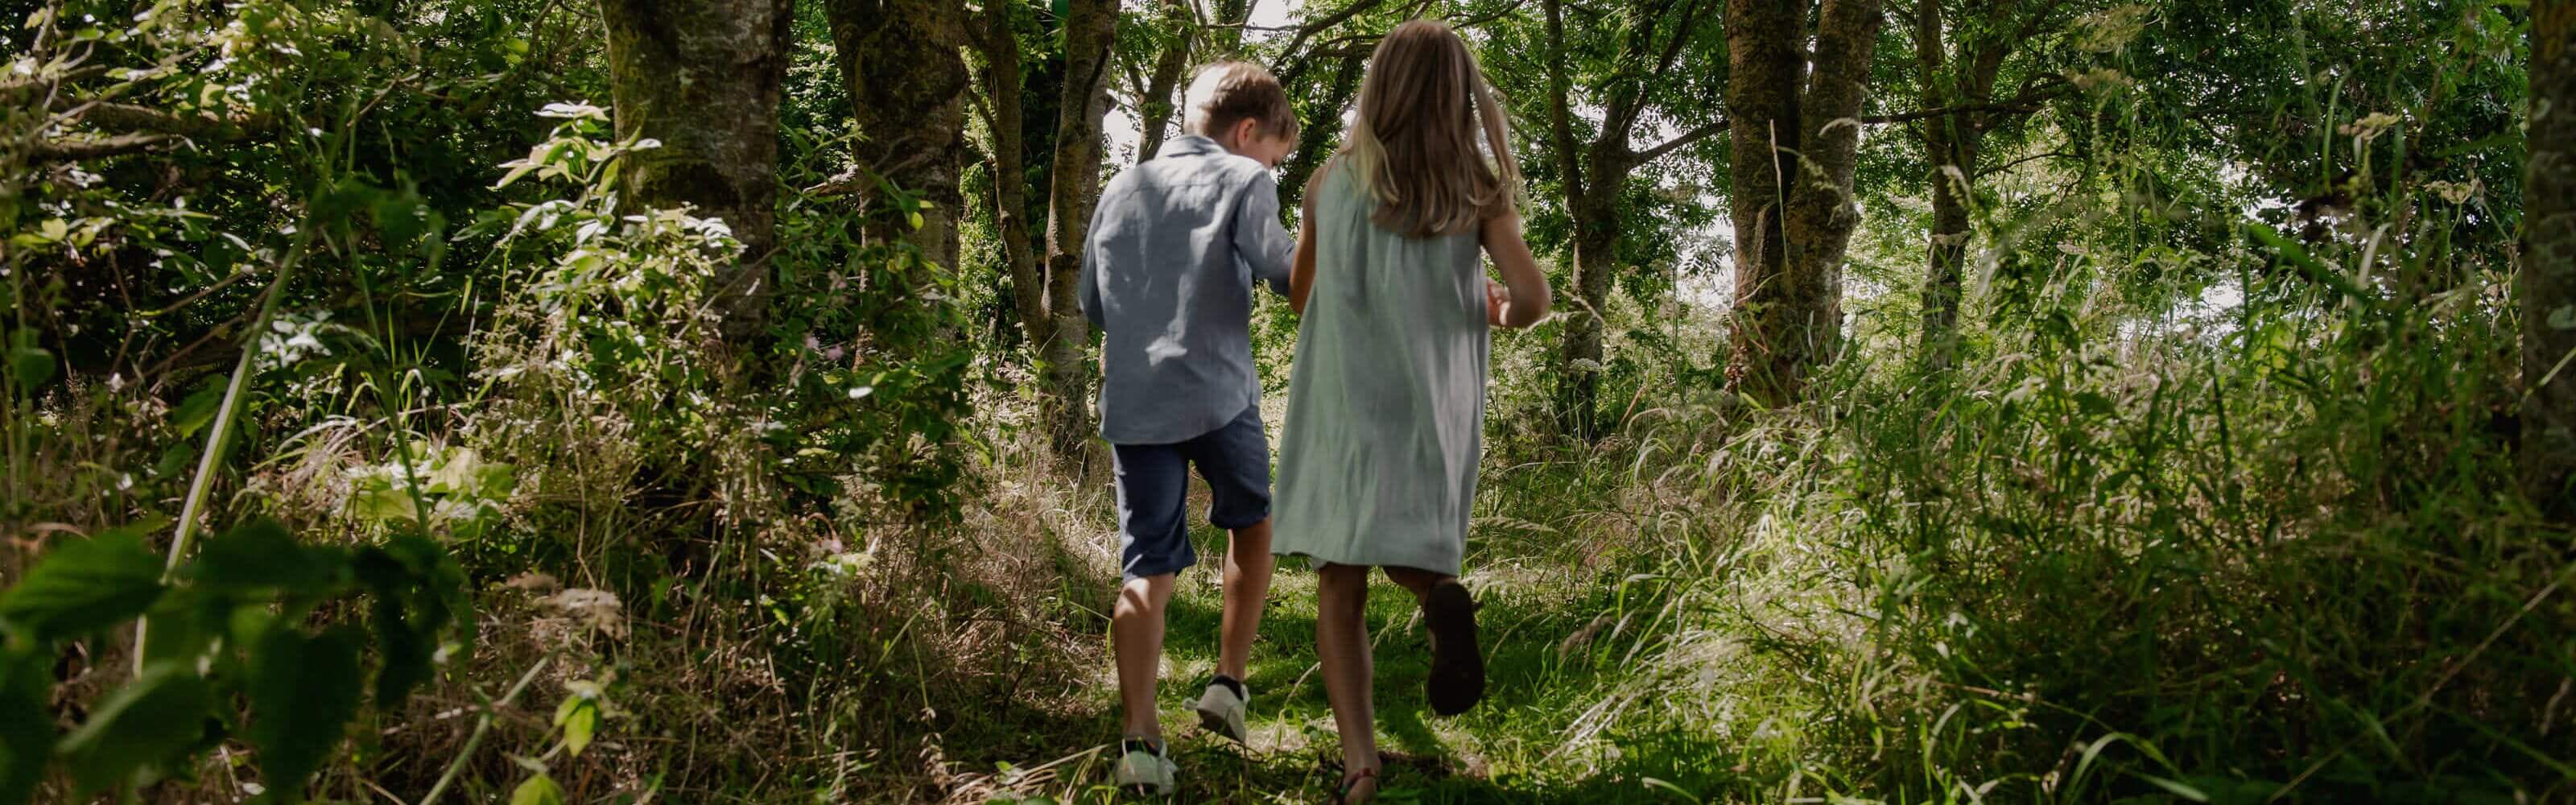 two children running through the woods